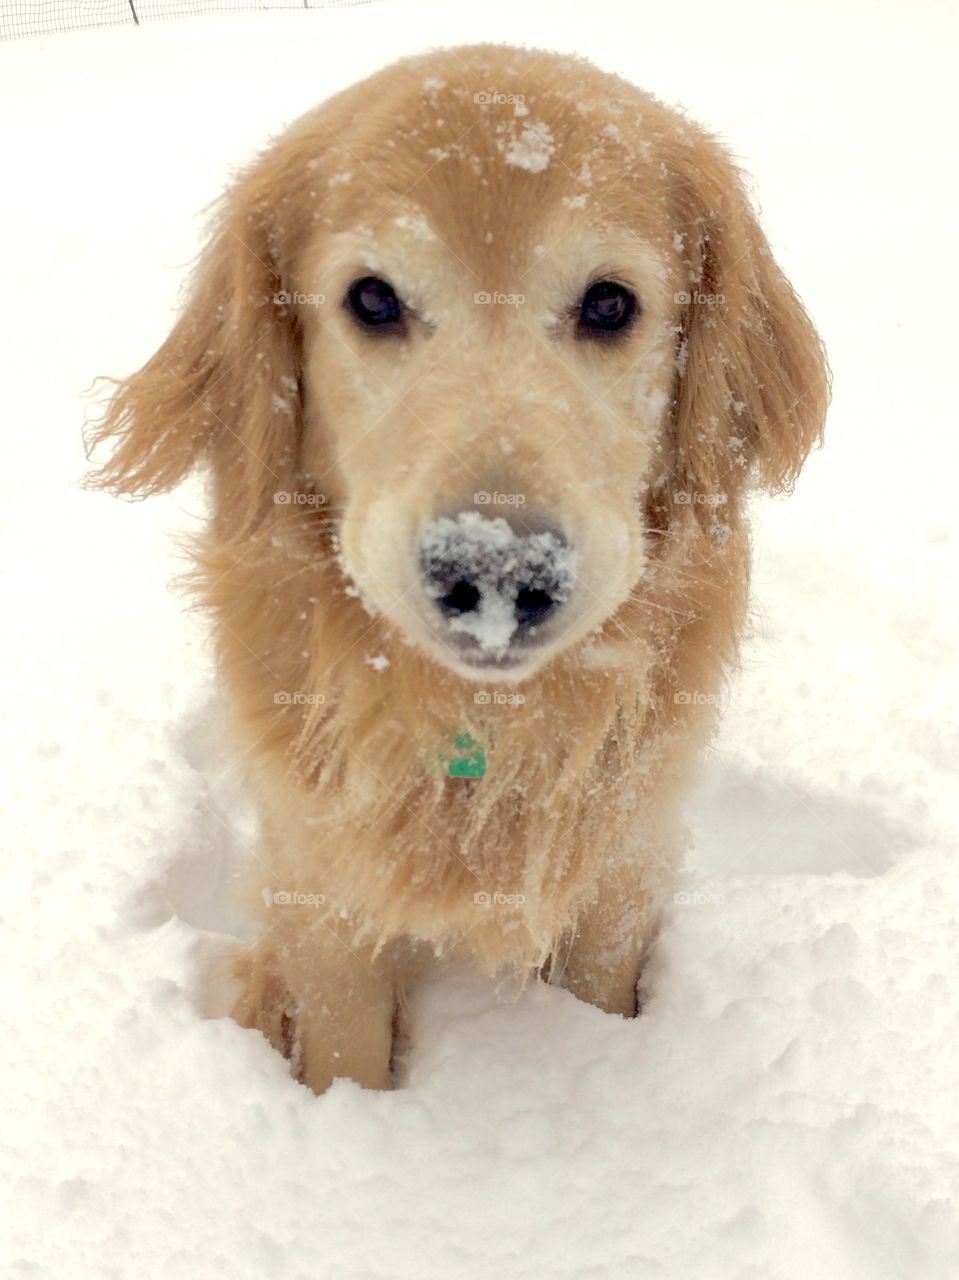 Snow dog
Nyc 
Snowstorm 